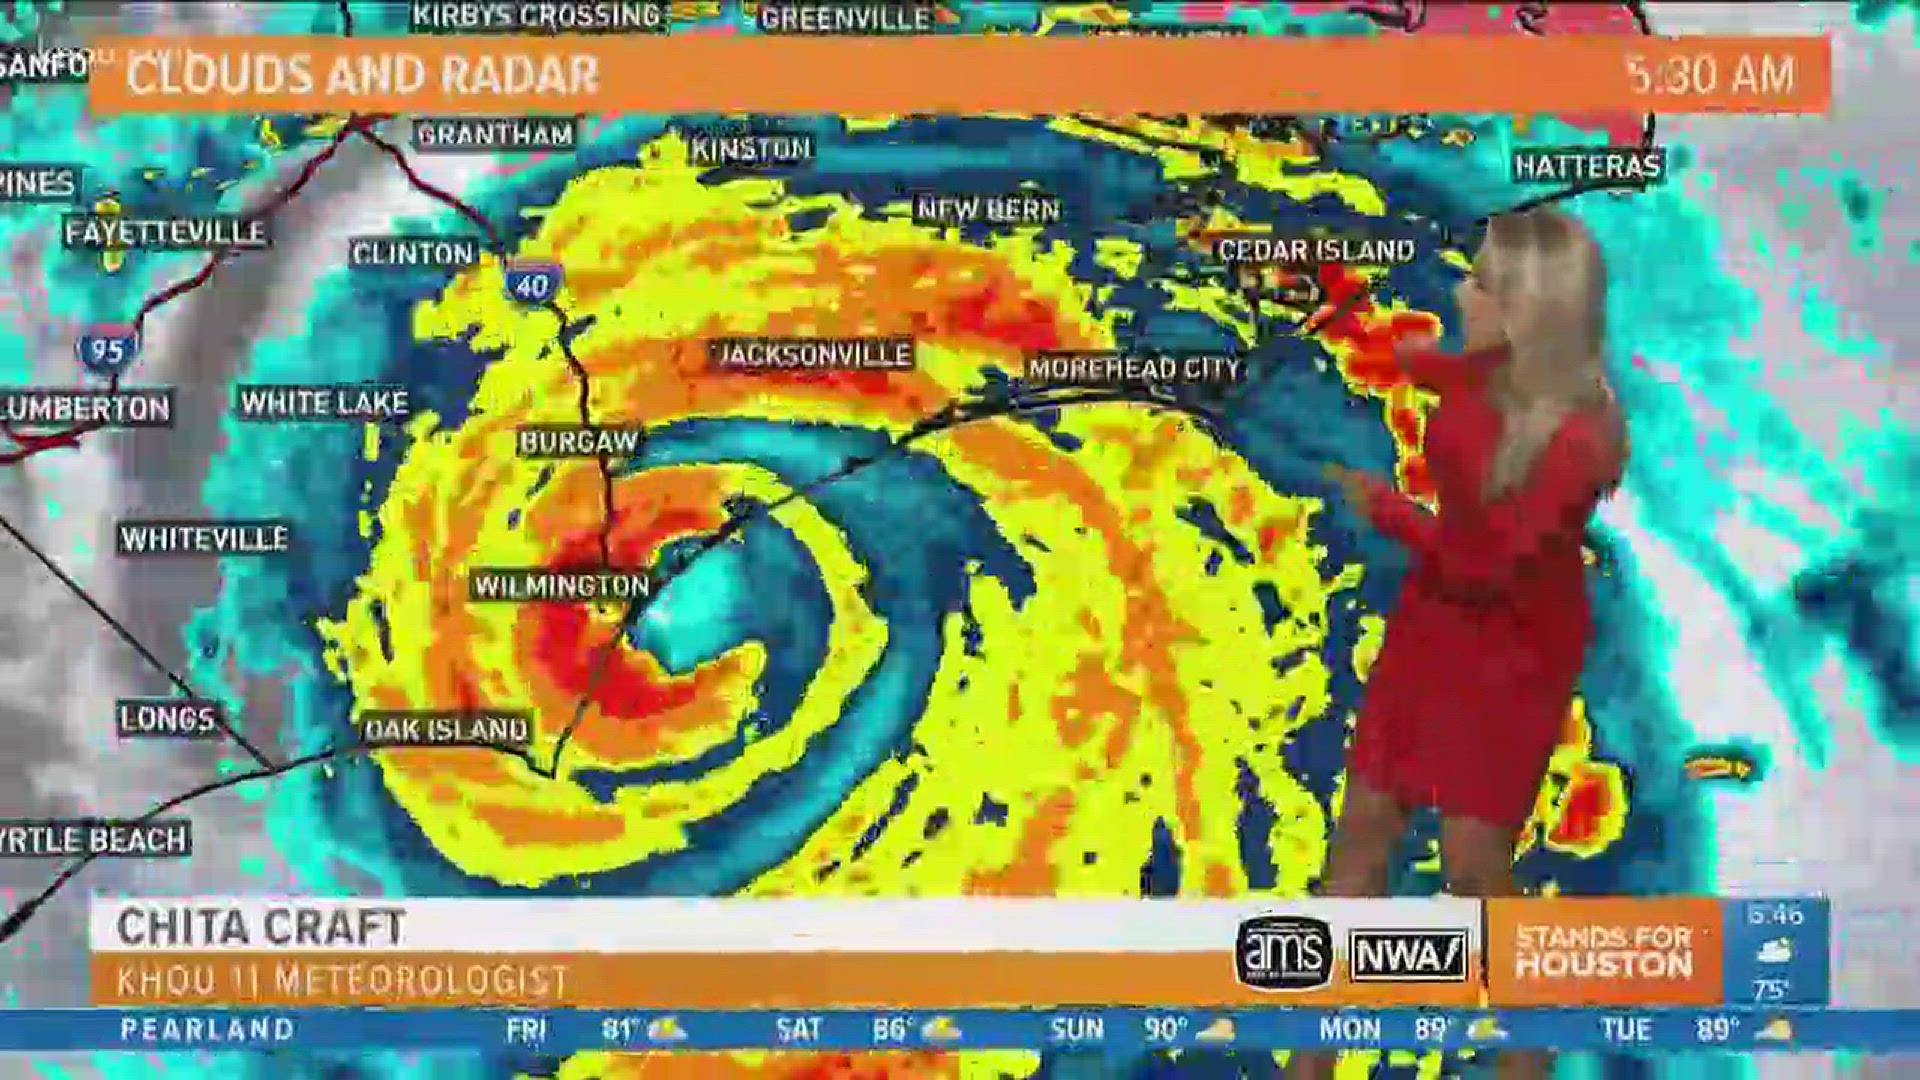 Hurricane Florence has made landfall near Wrightsville Beach, North Carolina with estimated maximum winds of 90 mph,